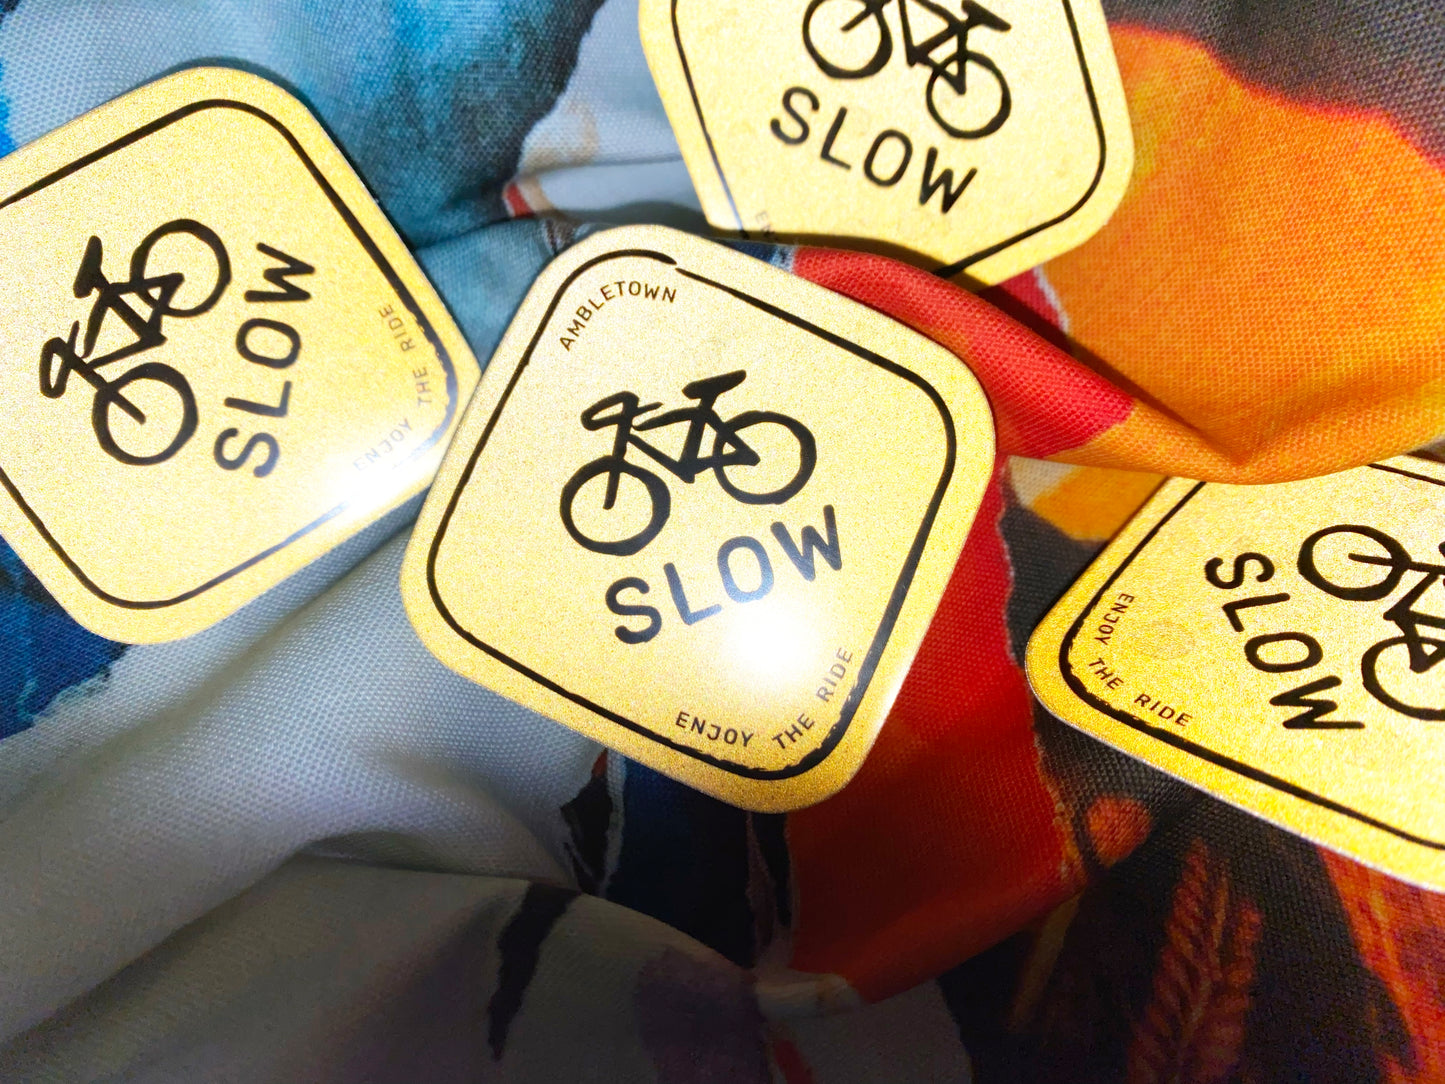 "Bike Slow" Reflective Sticker